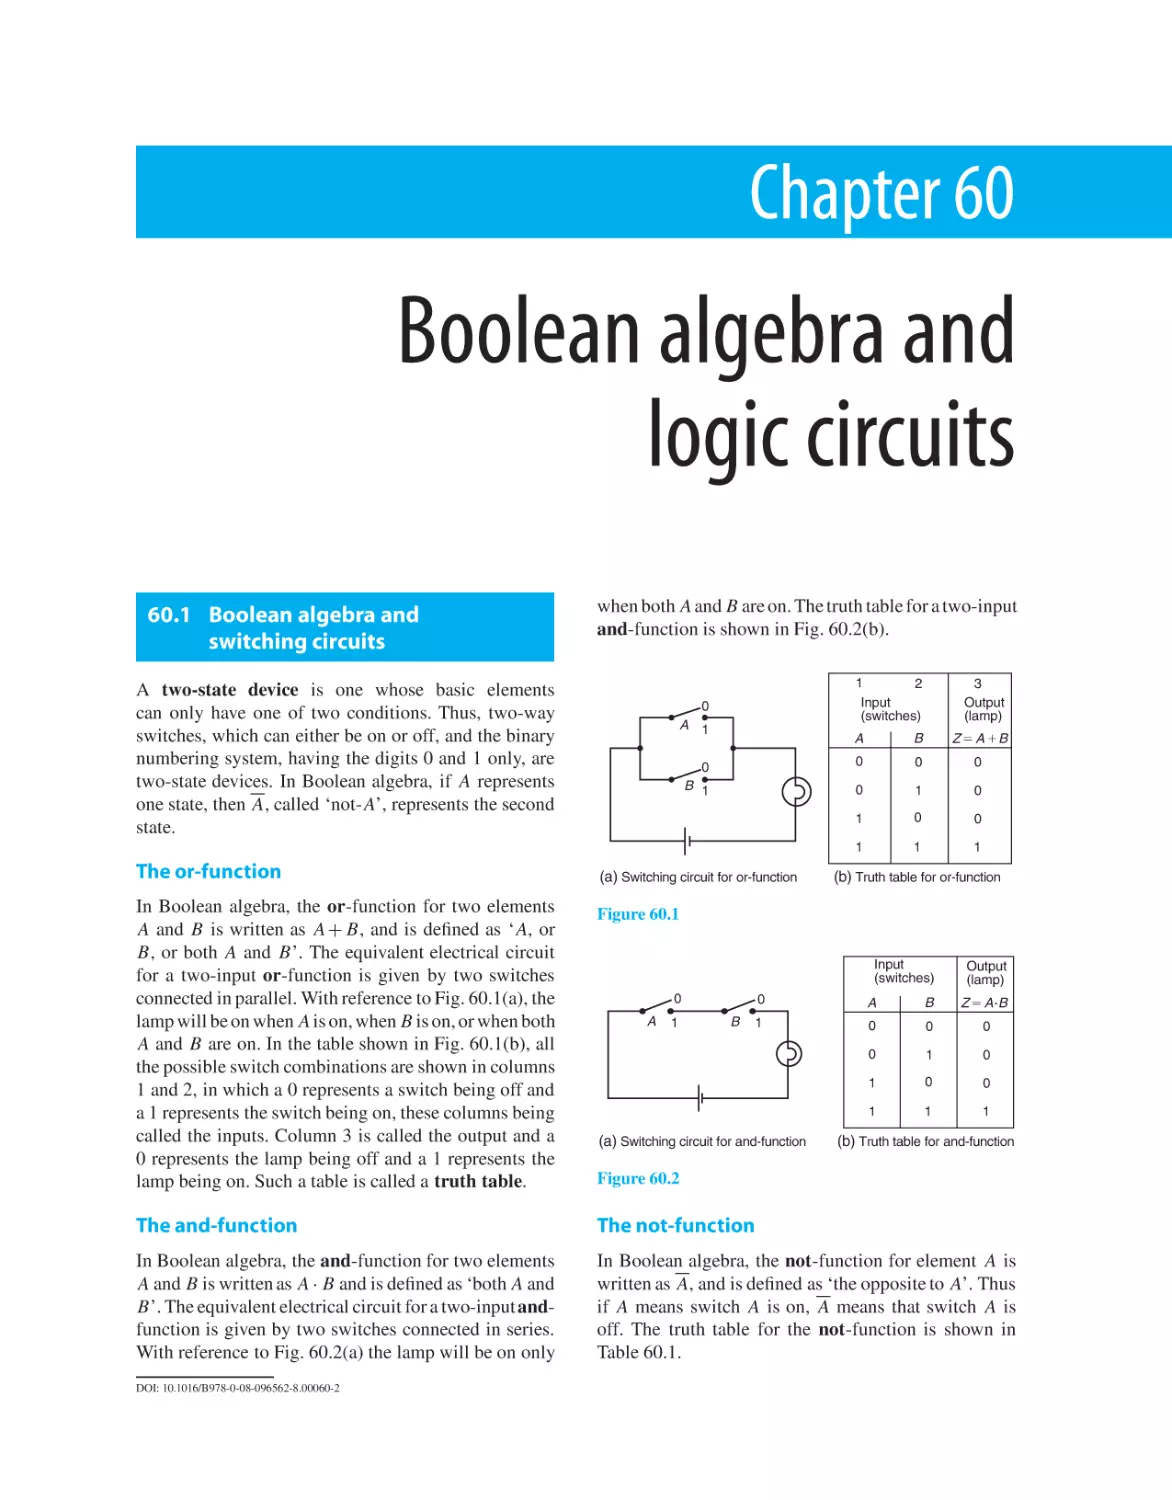 Chapter 60. Boolean algebra and logic circuits
60.1 Boolean algebra and switching circuits